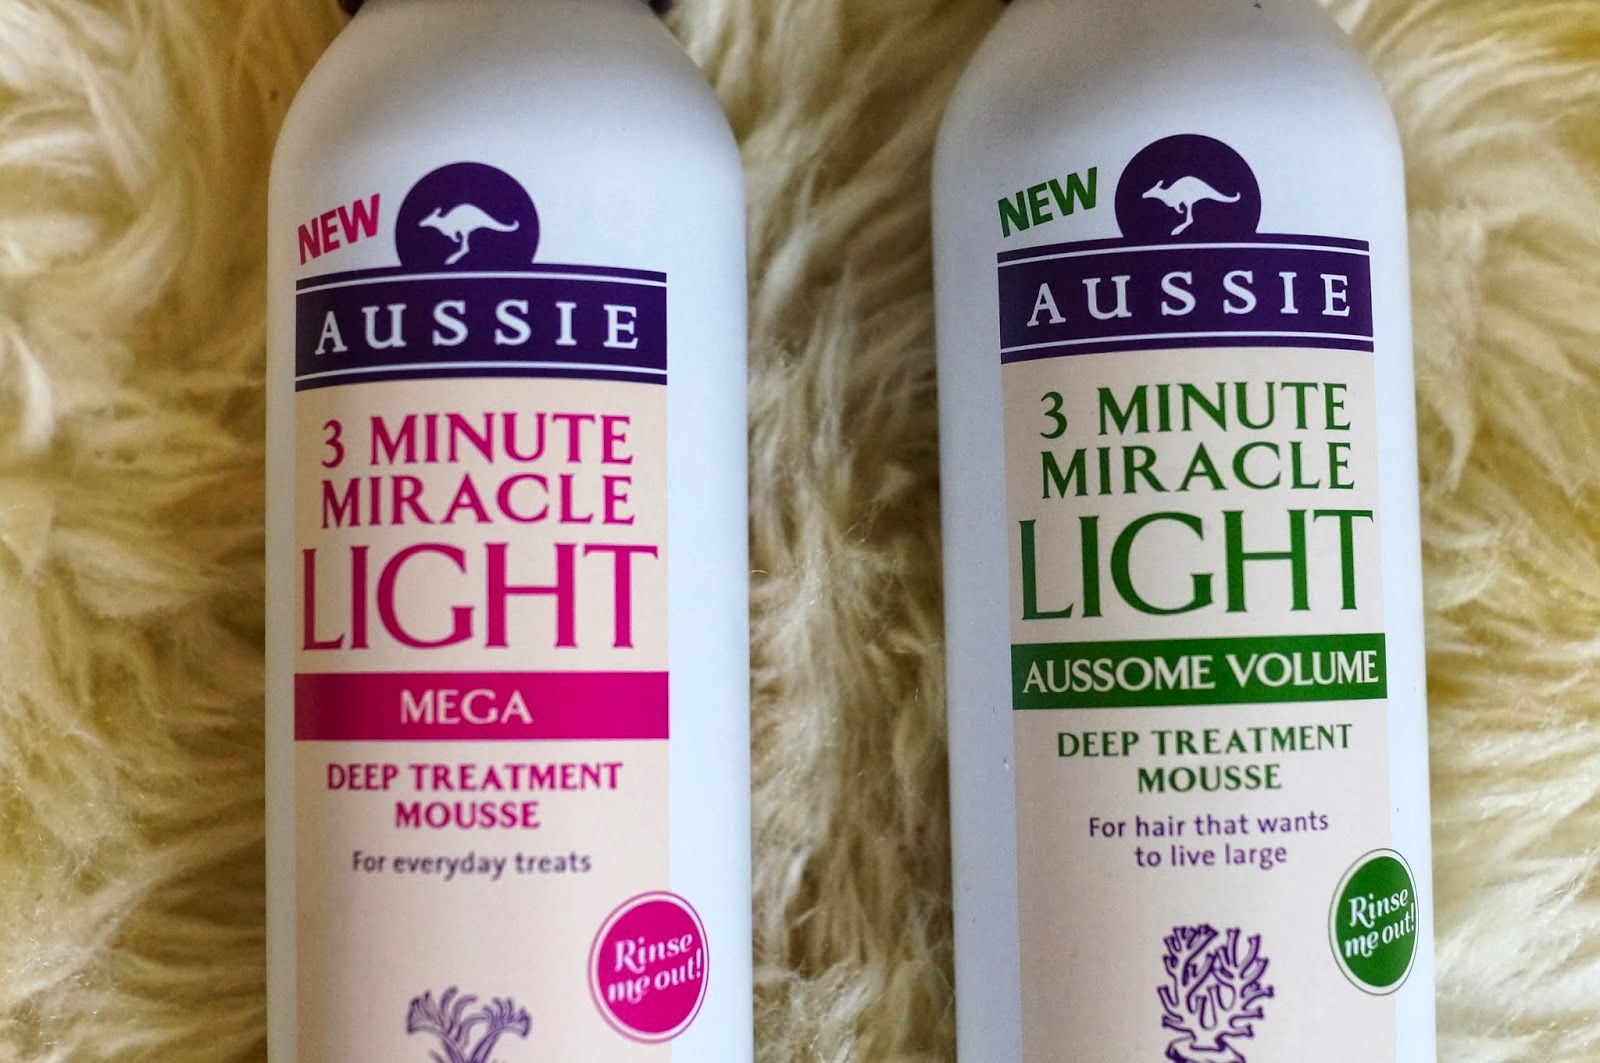 Aussie 3 minute miracle light deep treatment mousse